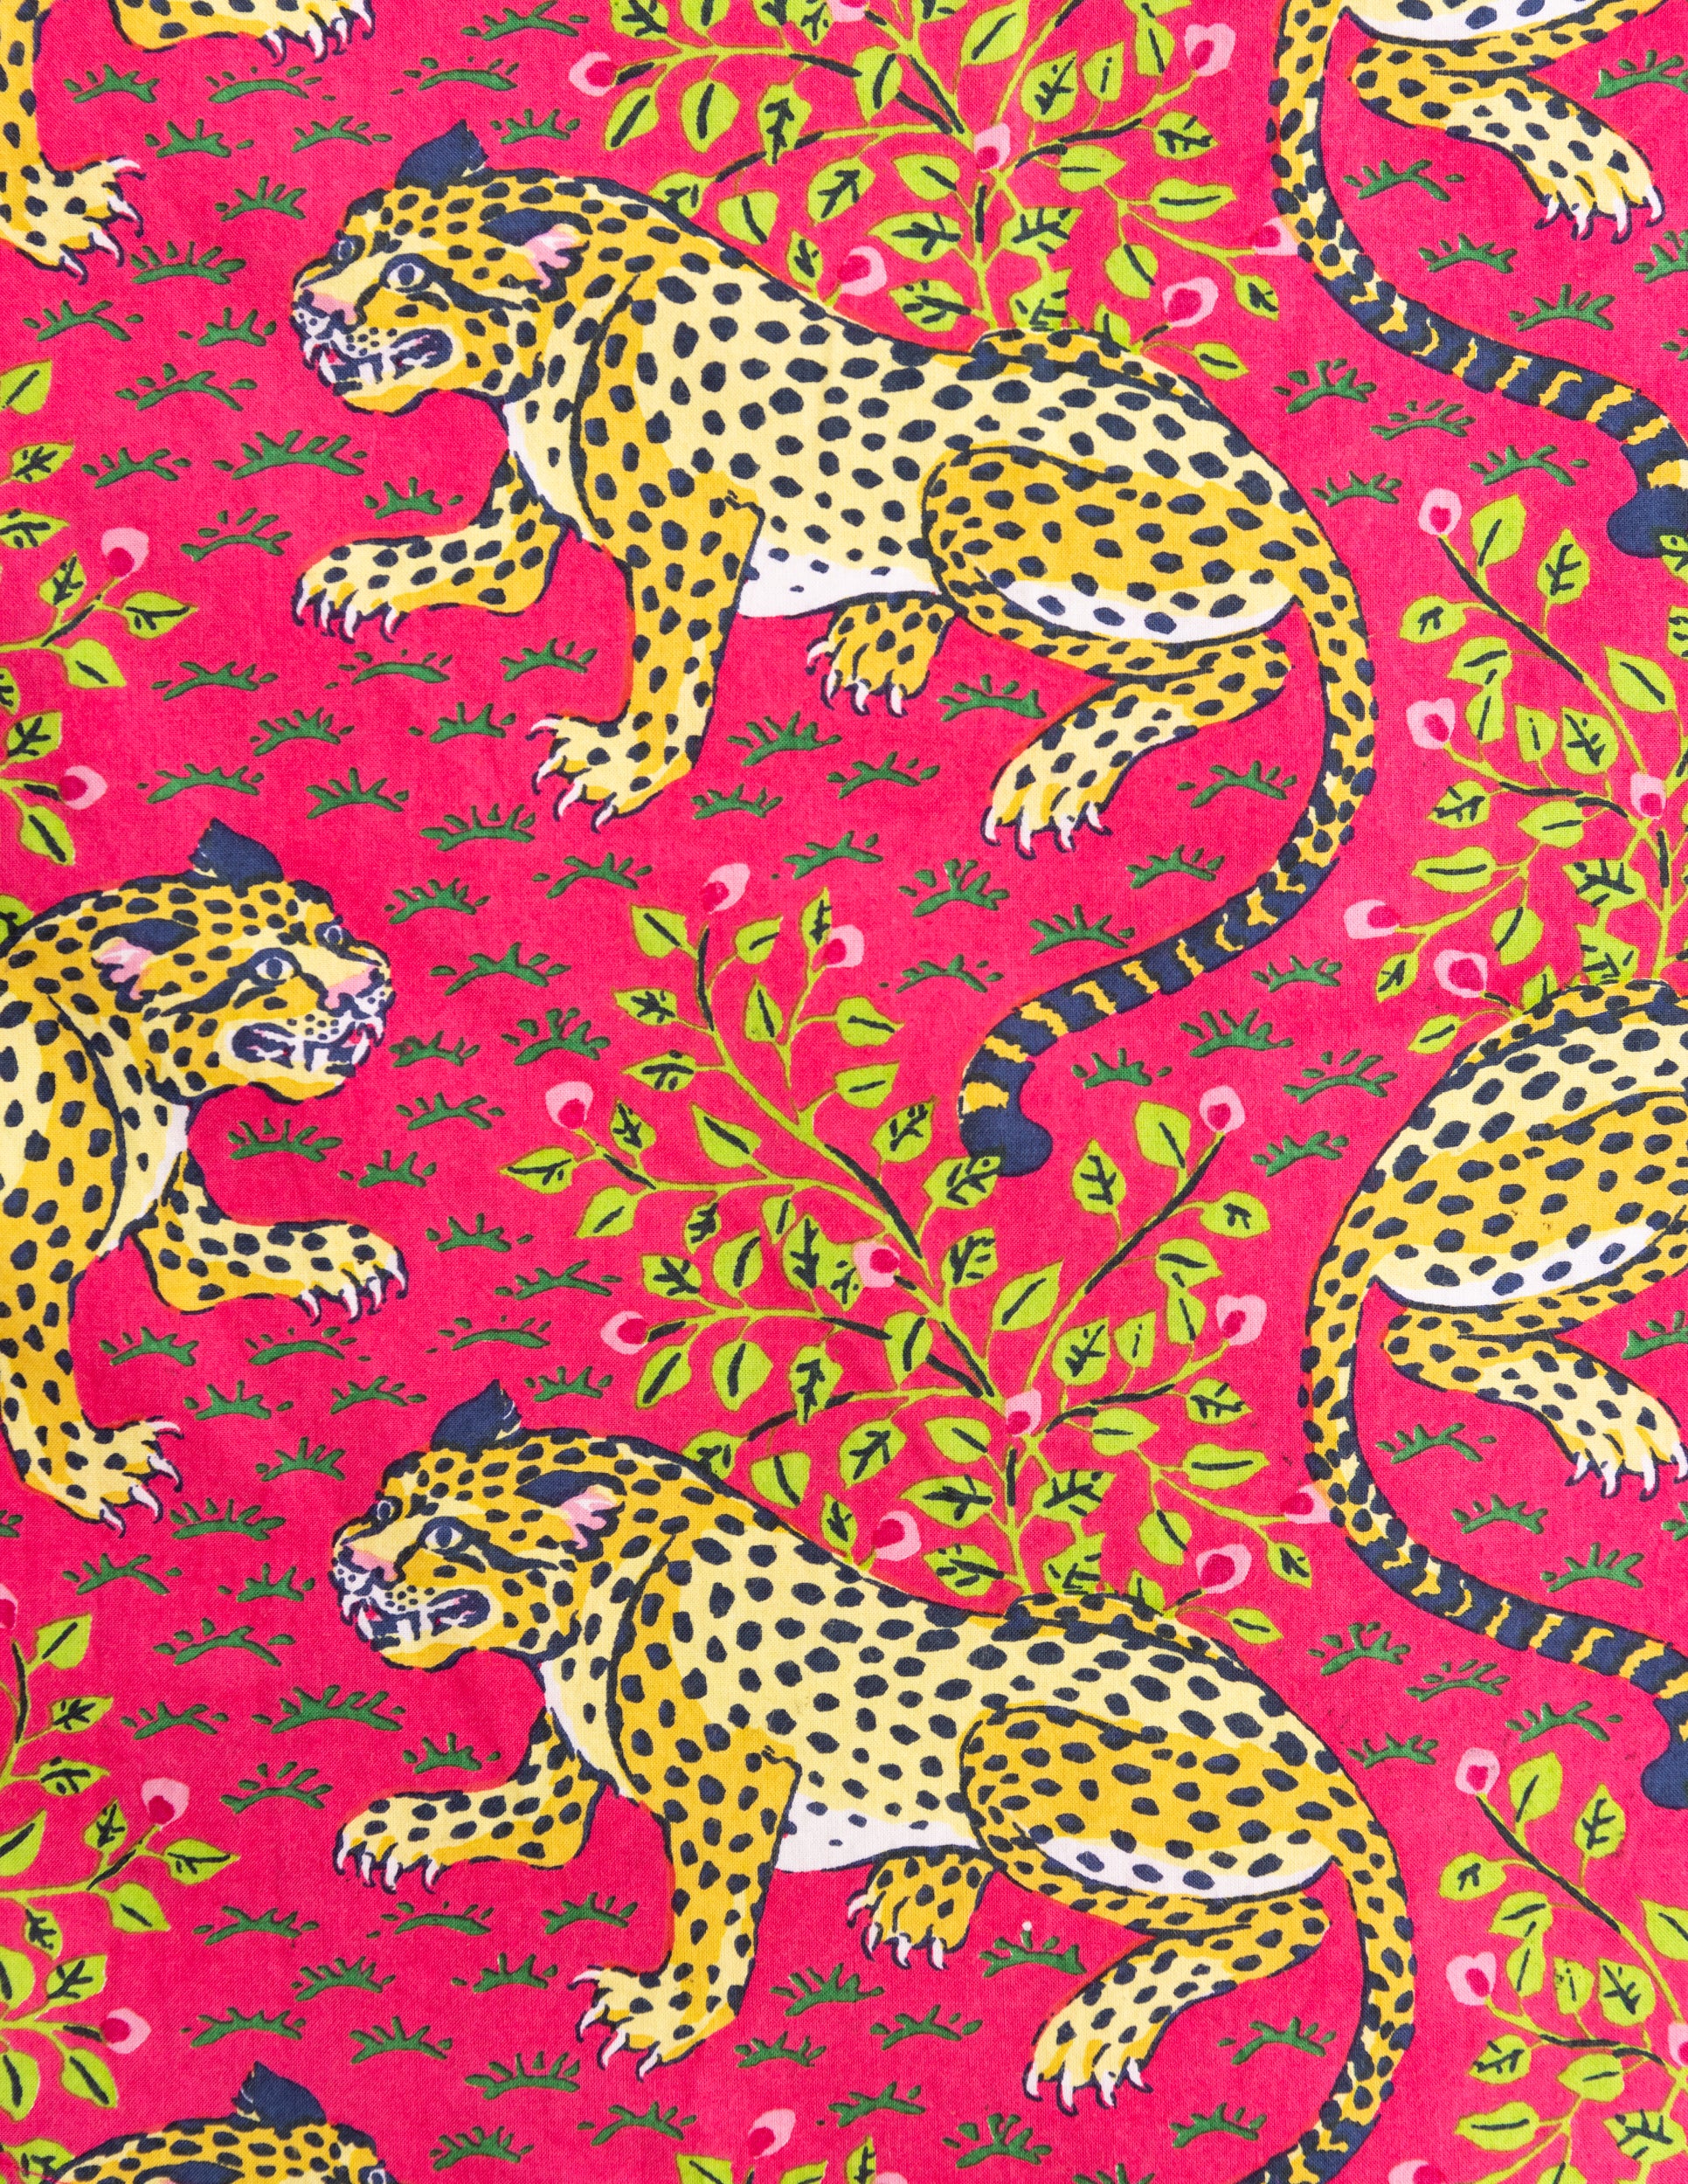 Victoria's secret animal leopard print with neon pink inside swim bottoms  size s 